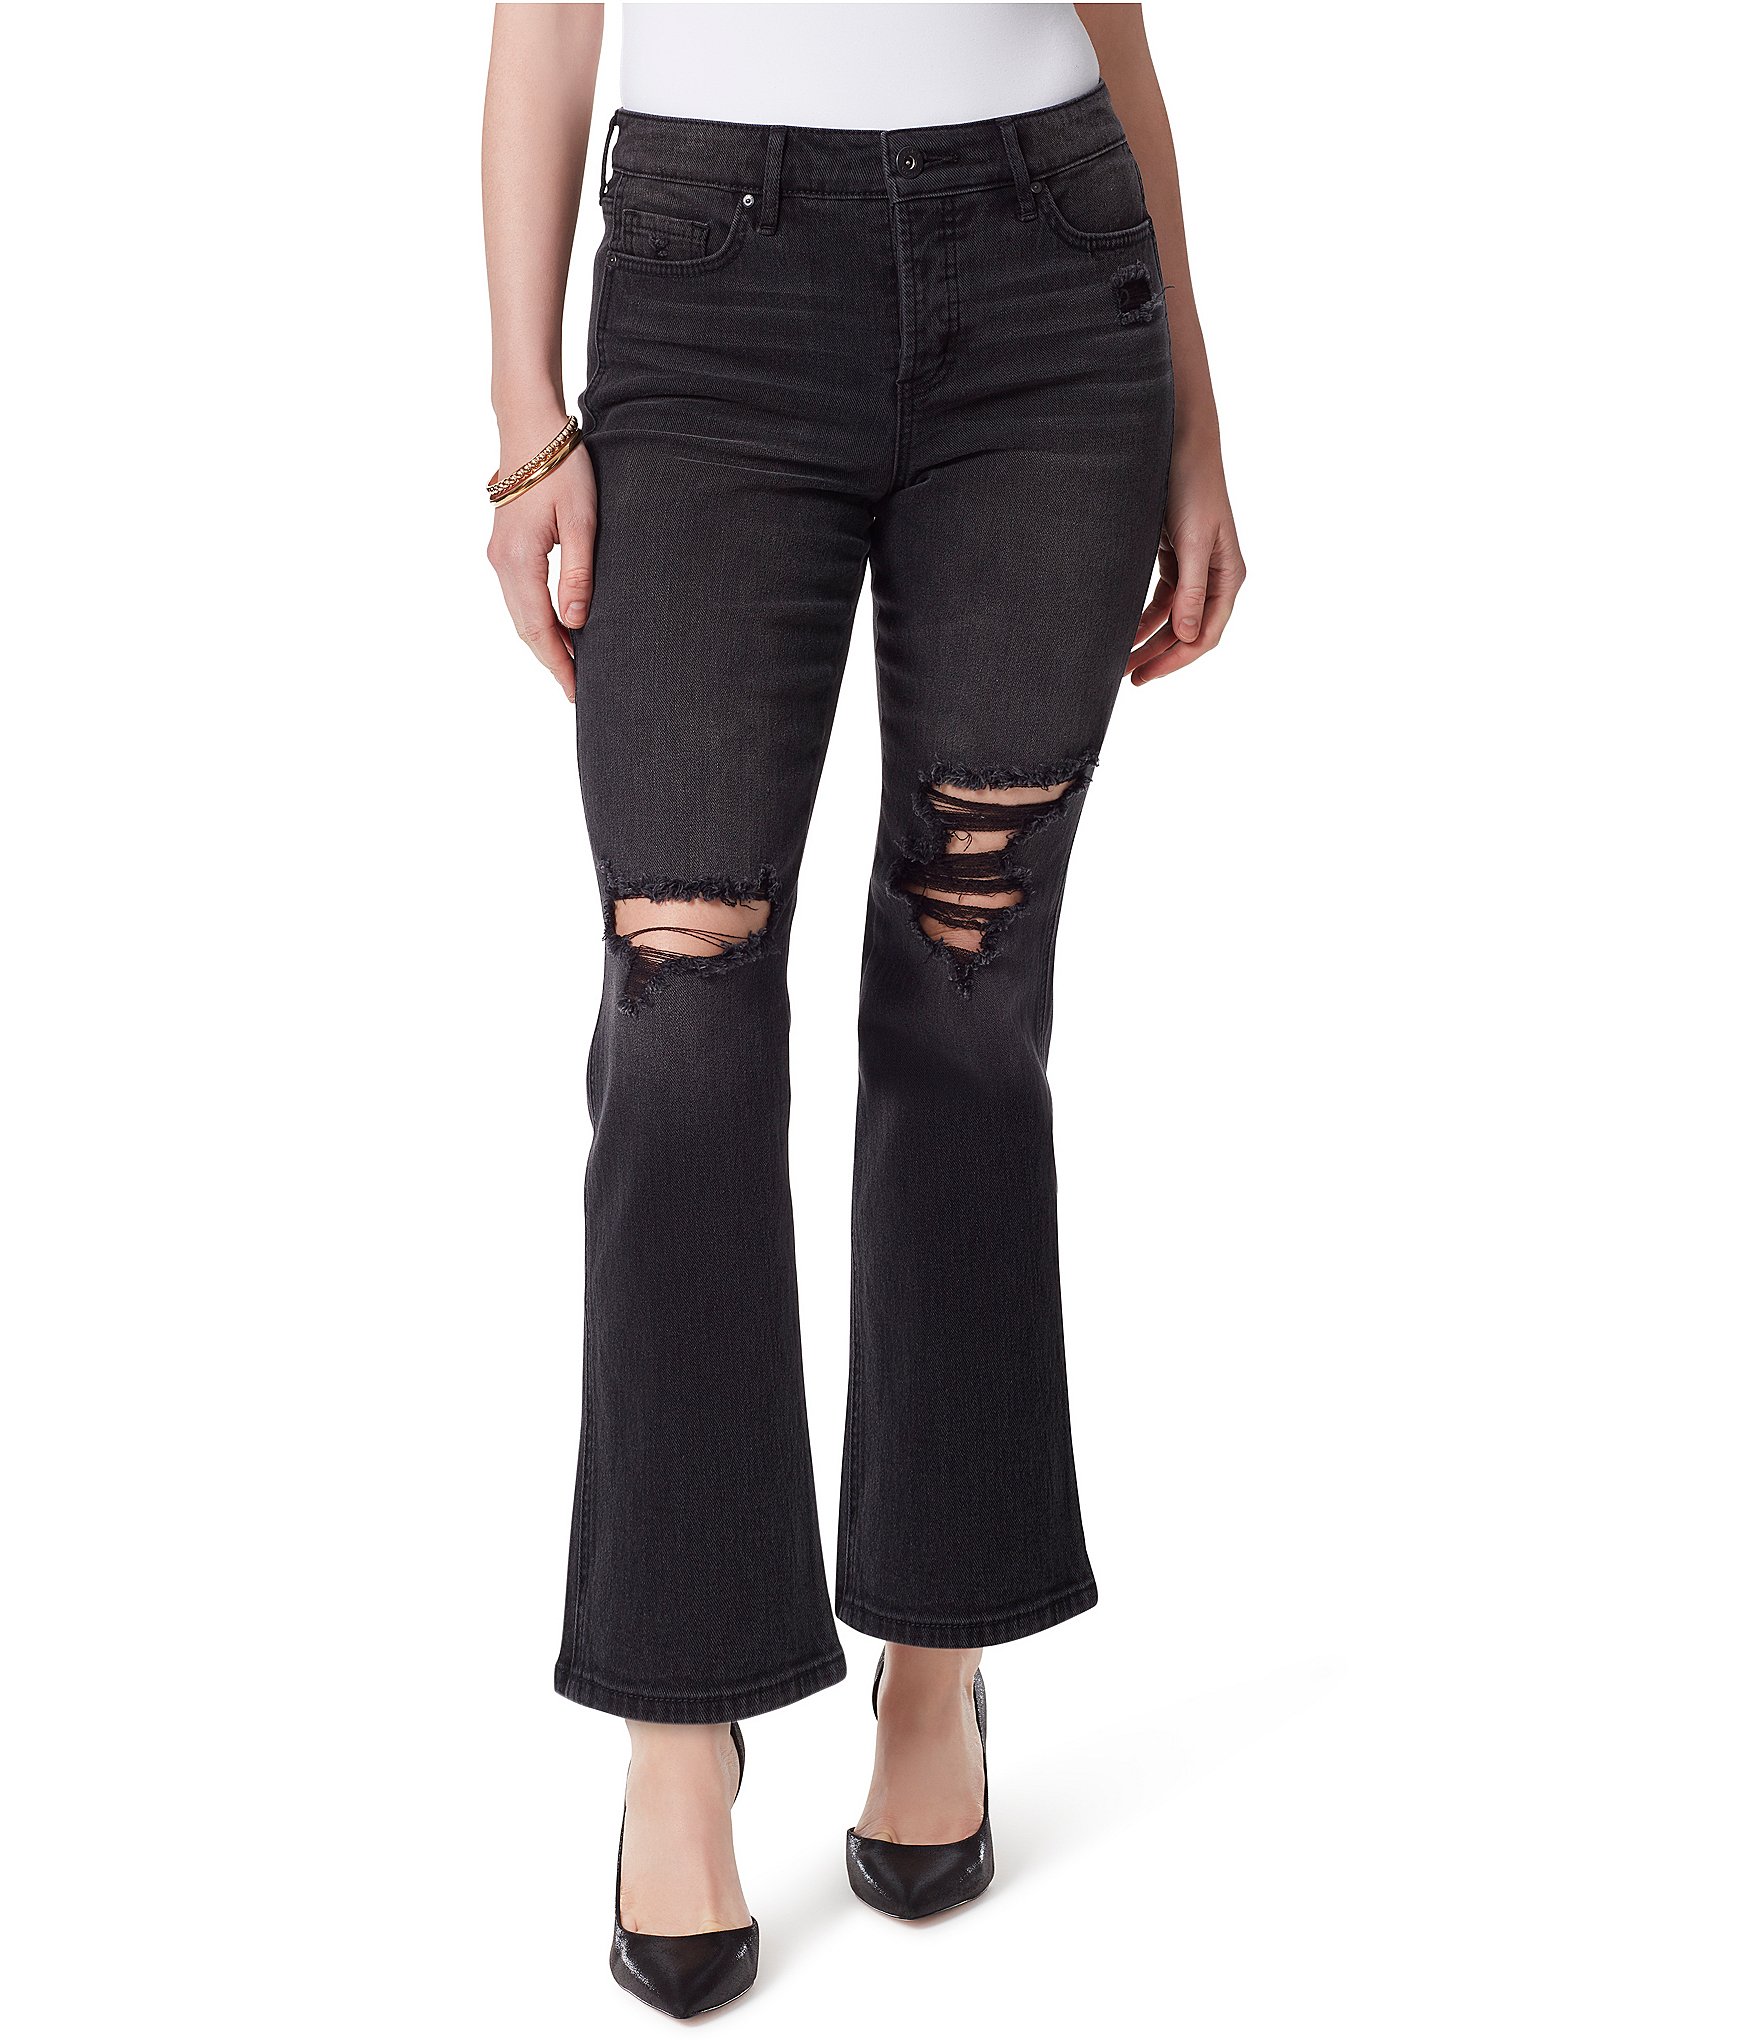 Jessica Simpson Women's Mid Rise Slight Flare Soft Stretch Boot Cut Jeans  (Black Rinse, 4/27) 